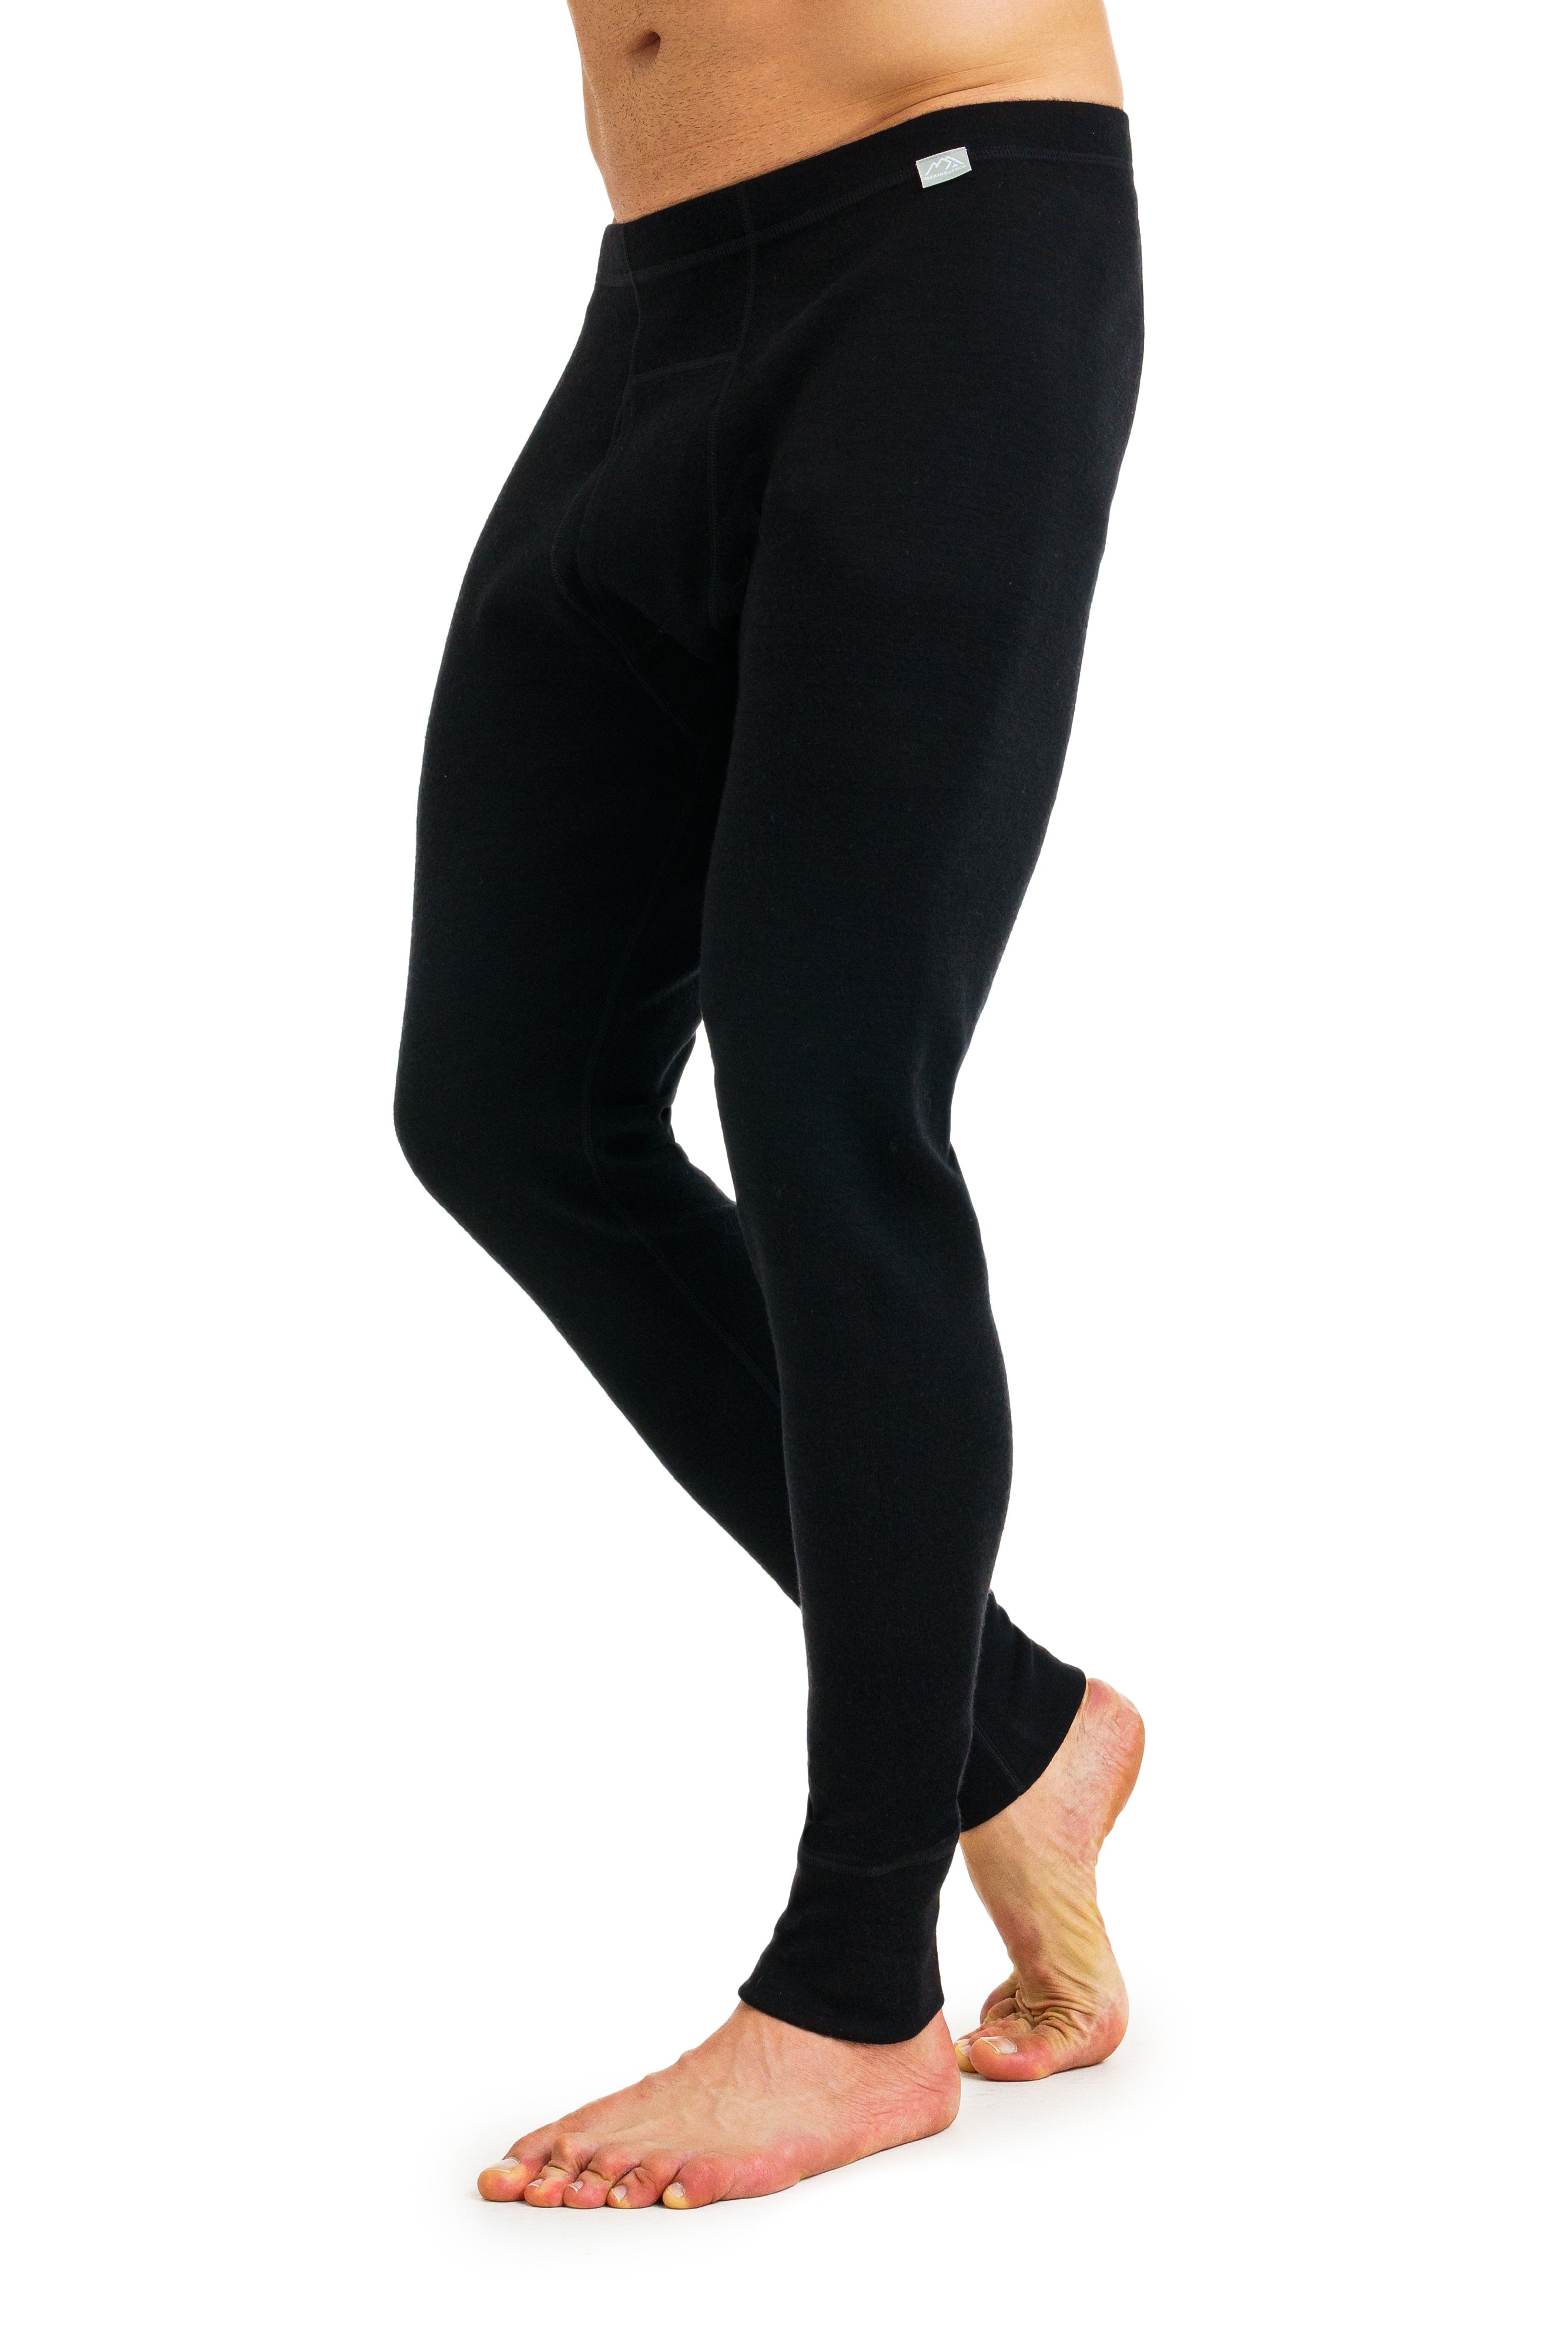 Merino Wool Pants - Heavyweight Base Layer Black, Bottom, Underwear, Thermal